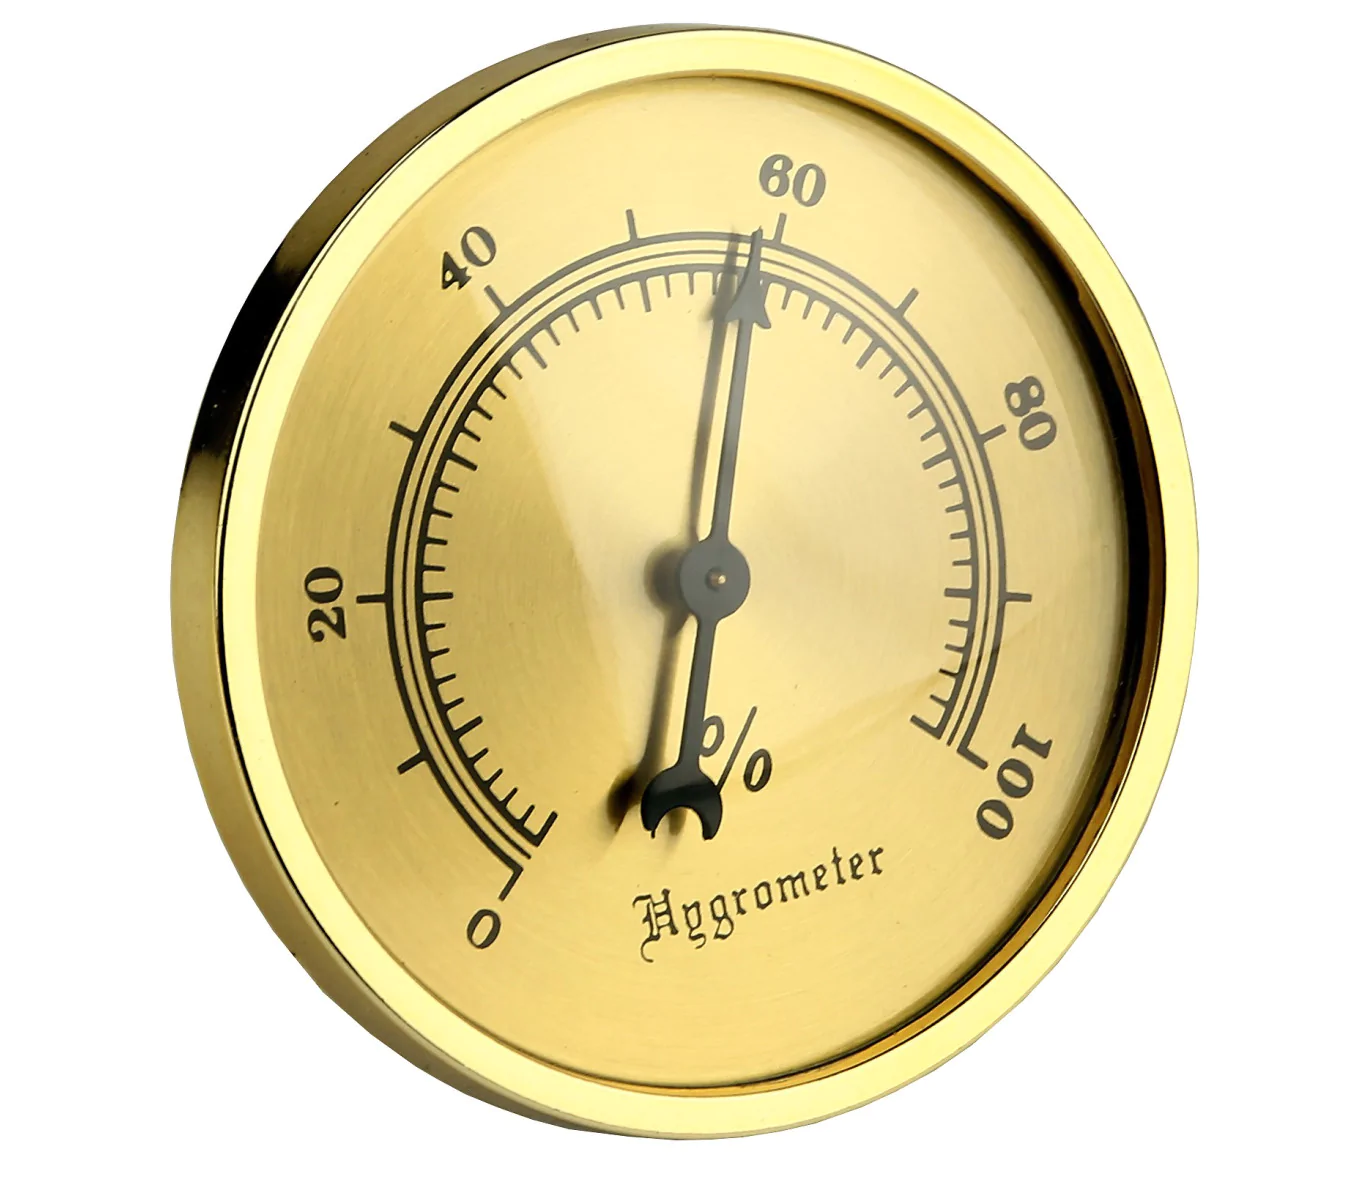 Hygrometer Basic Large  Buy online at lowest price